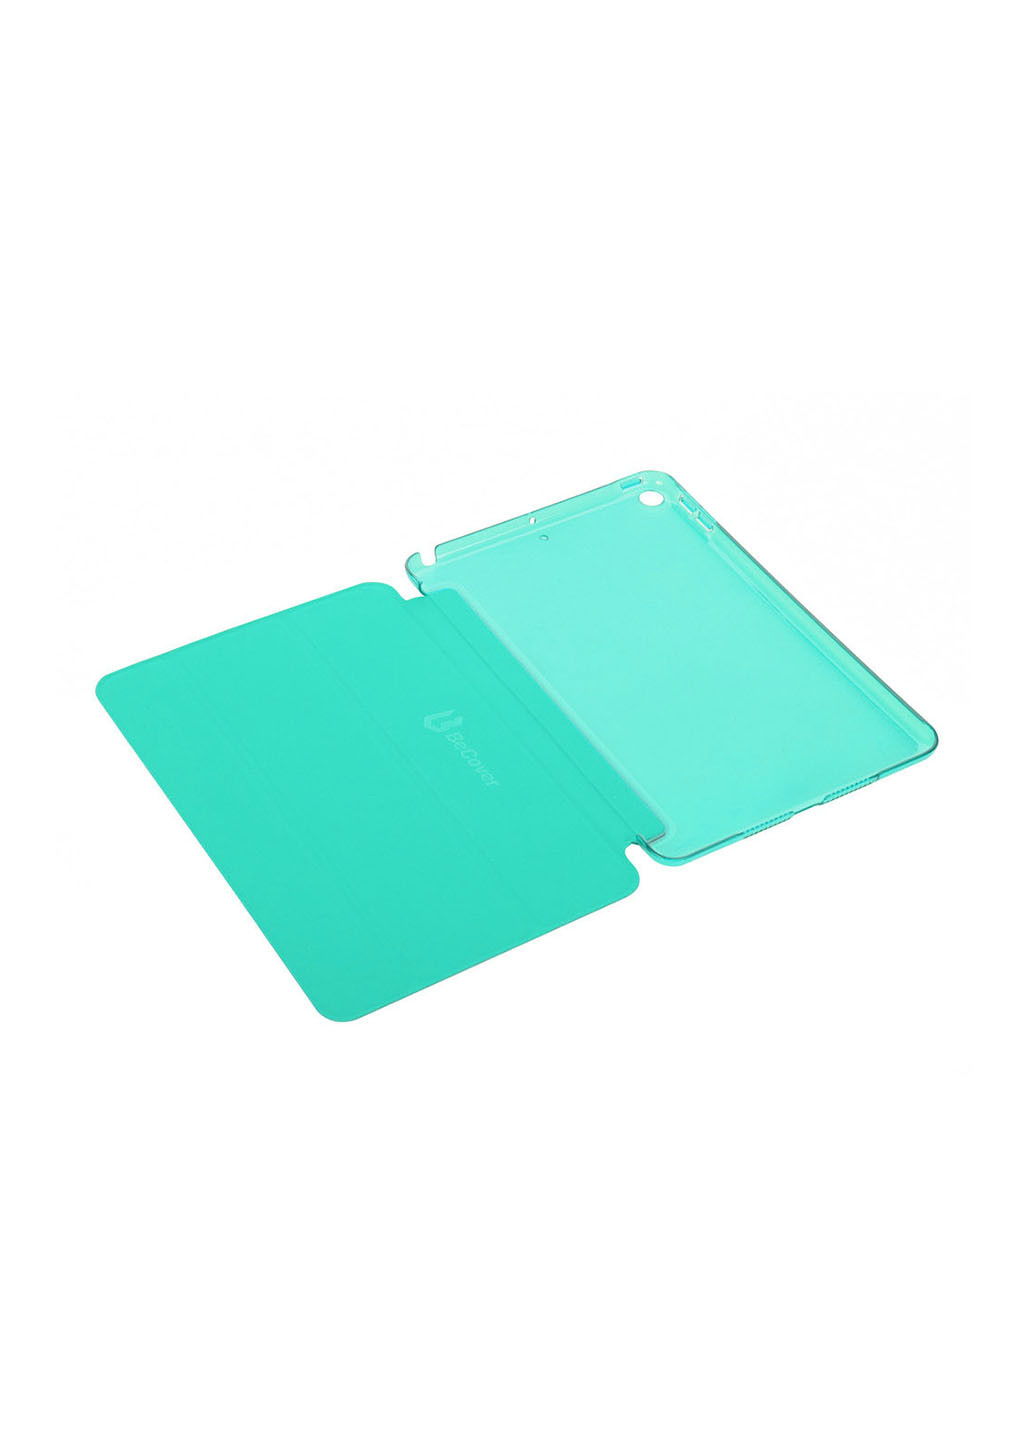 Чехол-книжка Smart Case для Apple iPad mini 5 Green (703789) BeCover книжка smart case для apple ipad mini 5 green (703789) (151229142)